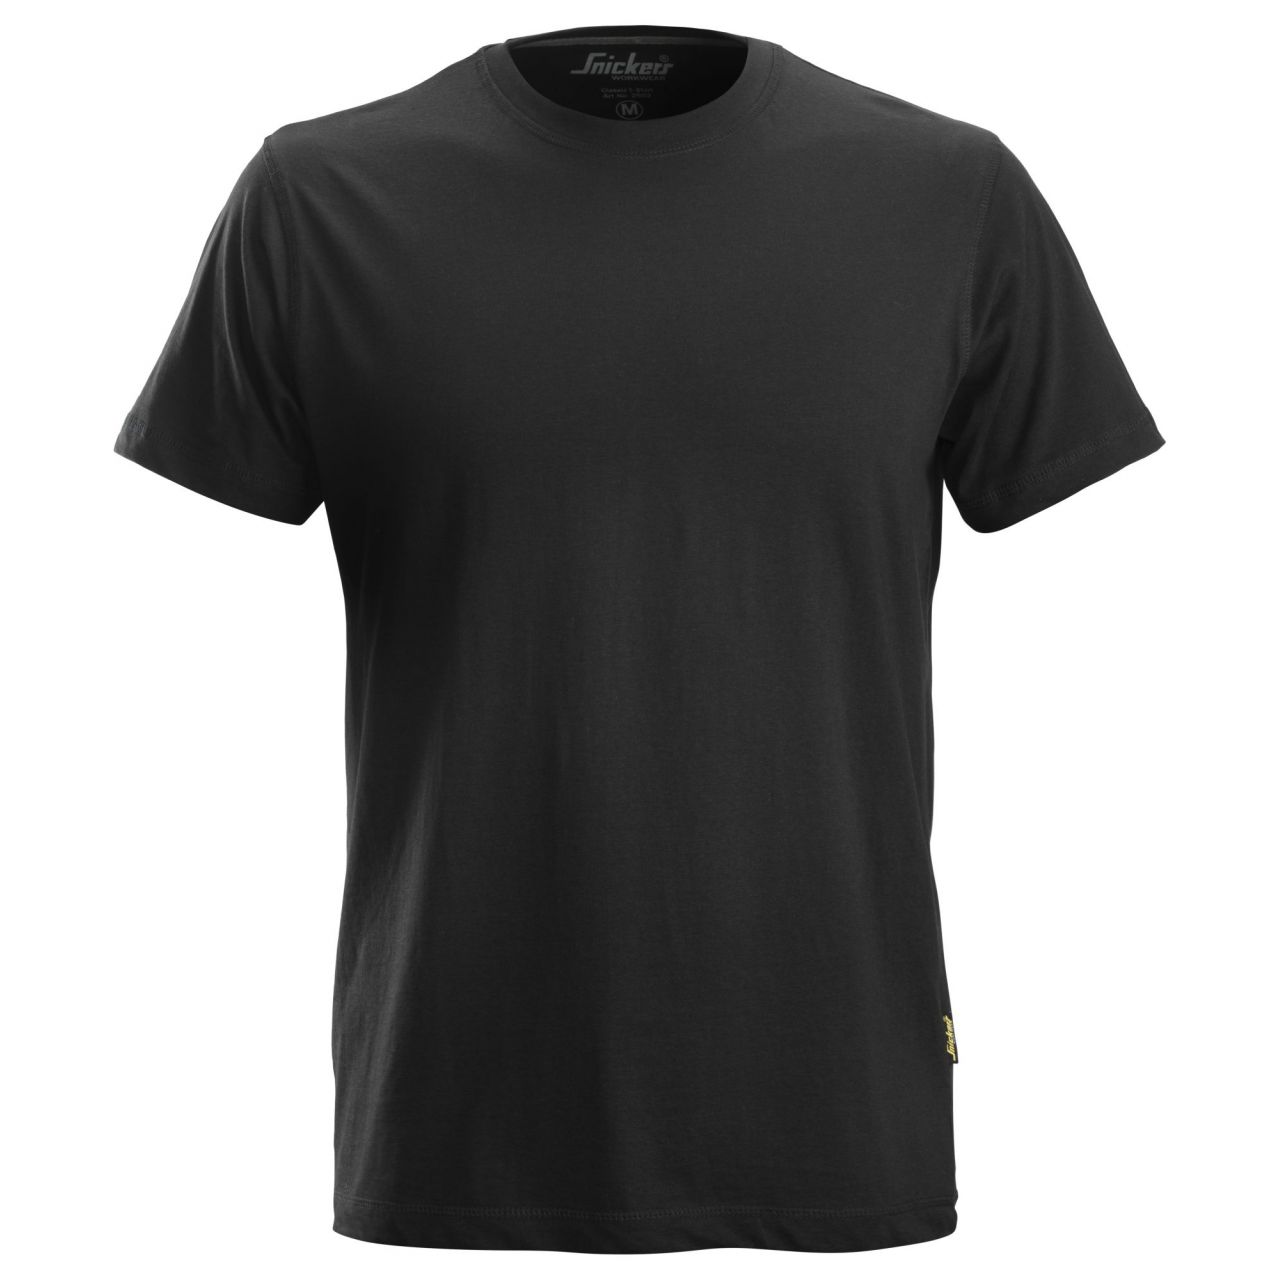 2502 Camiseta negro talla XXL